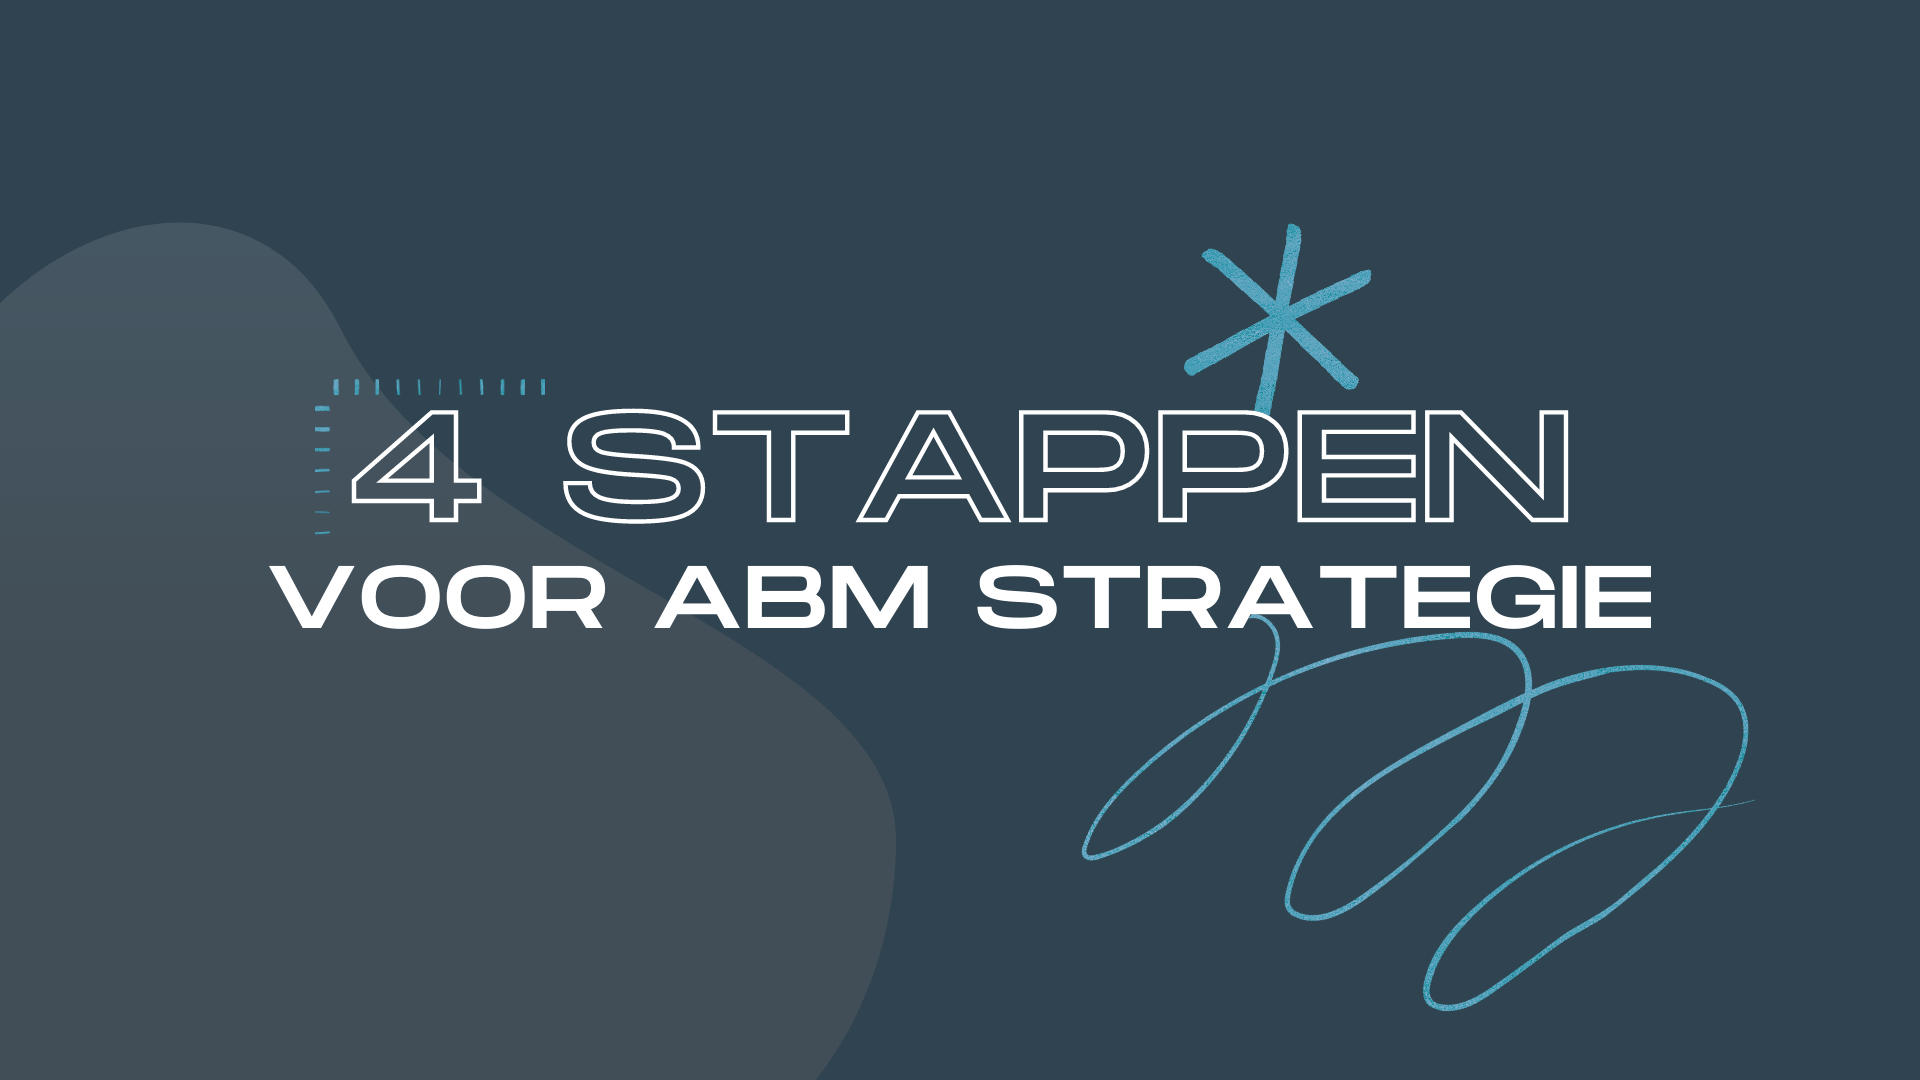 4 stappen account based marketing strategie